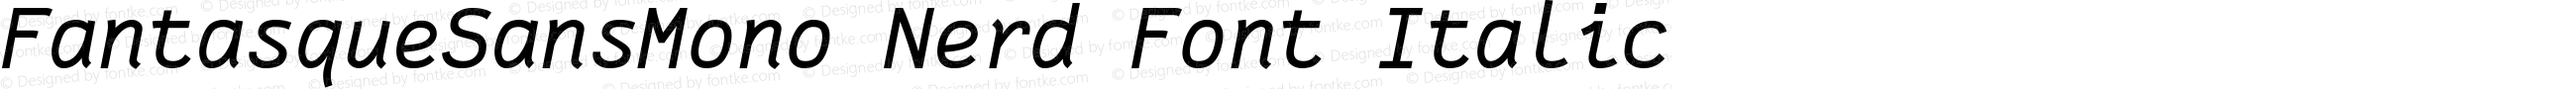 Fantasque Sans Mono Italic Nerd Font Plus Font Awesome